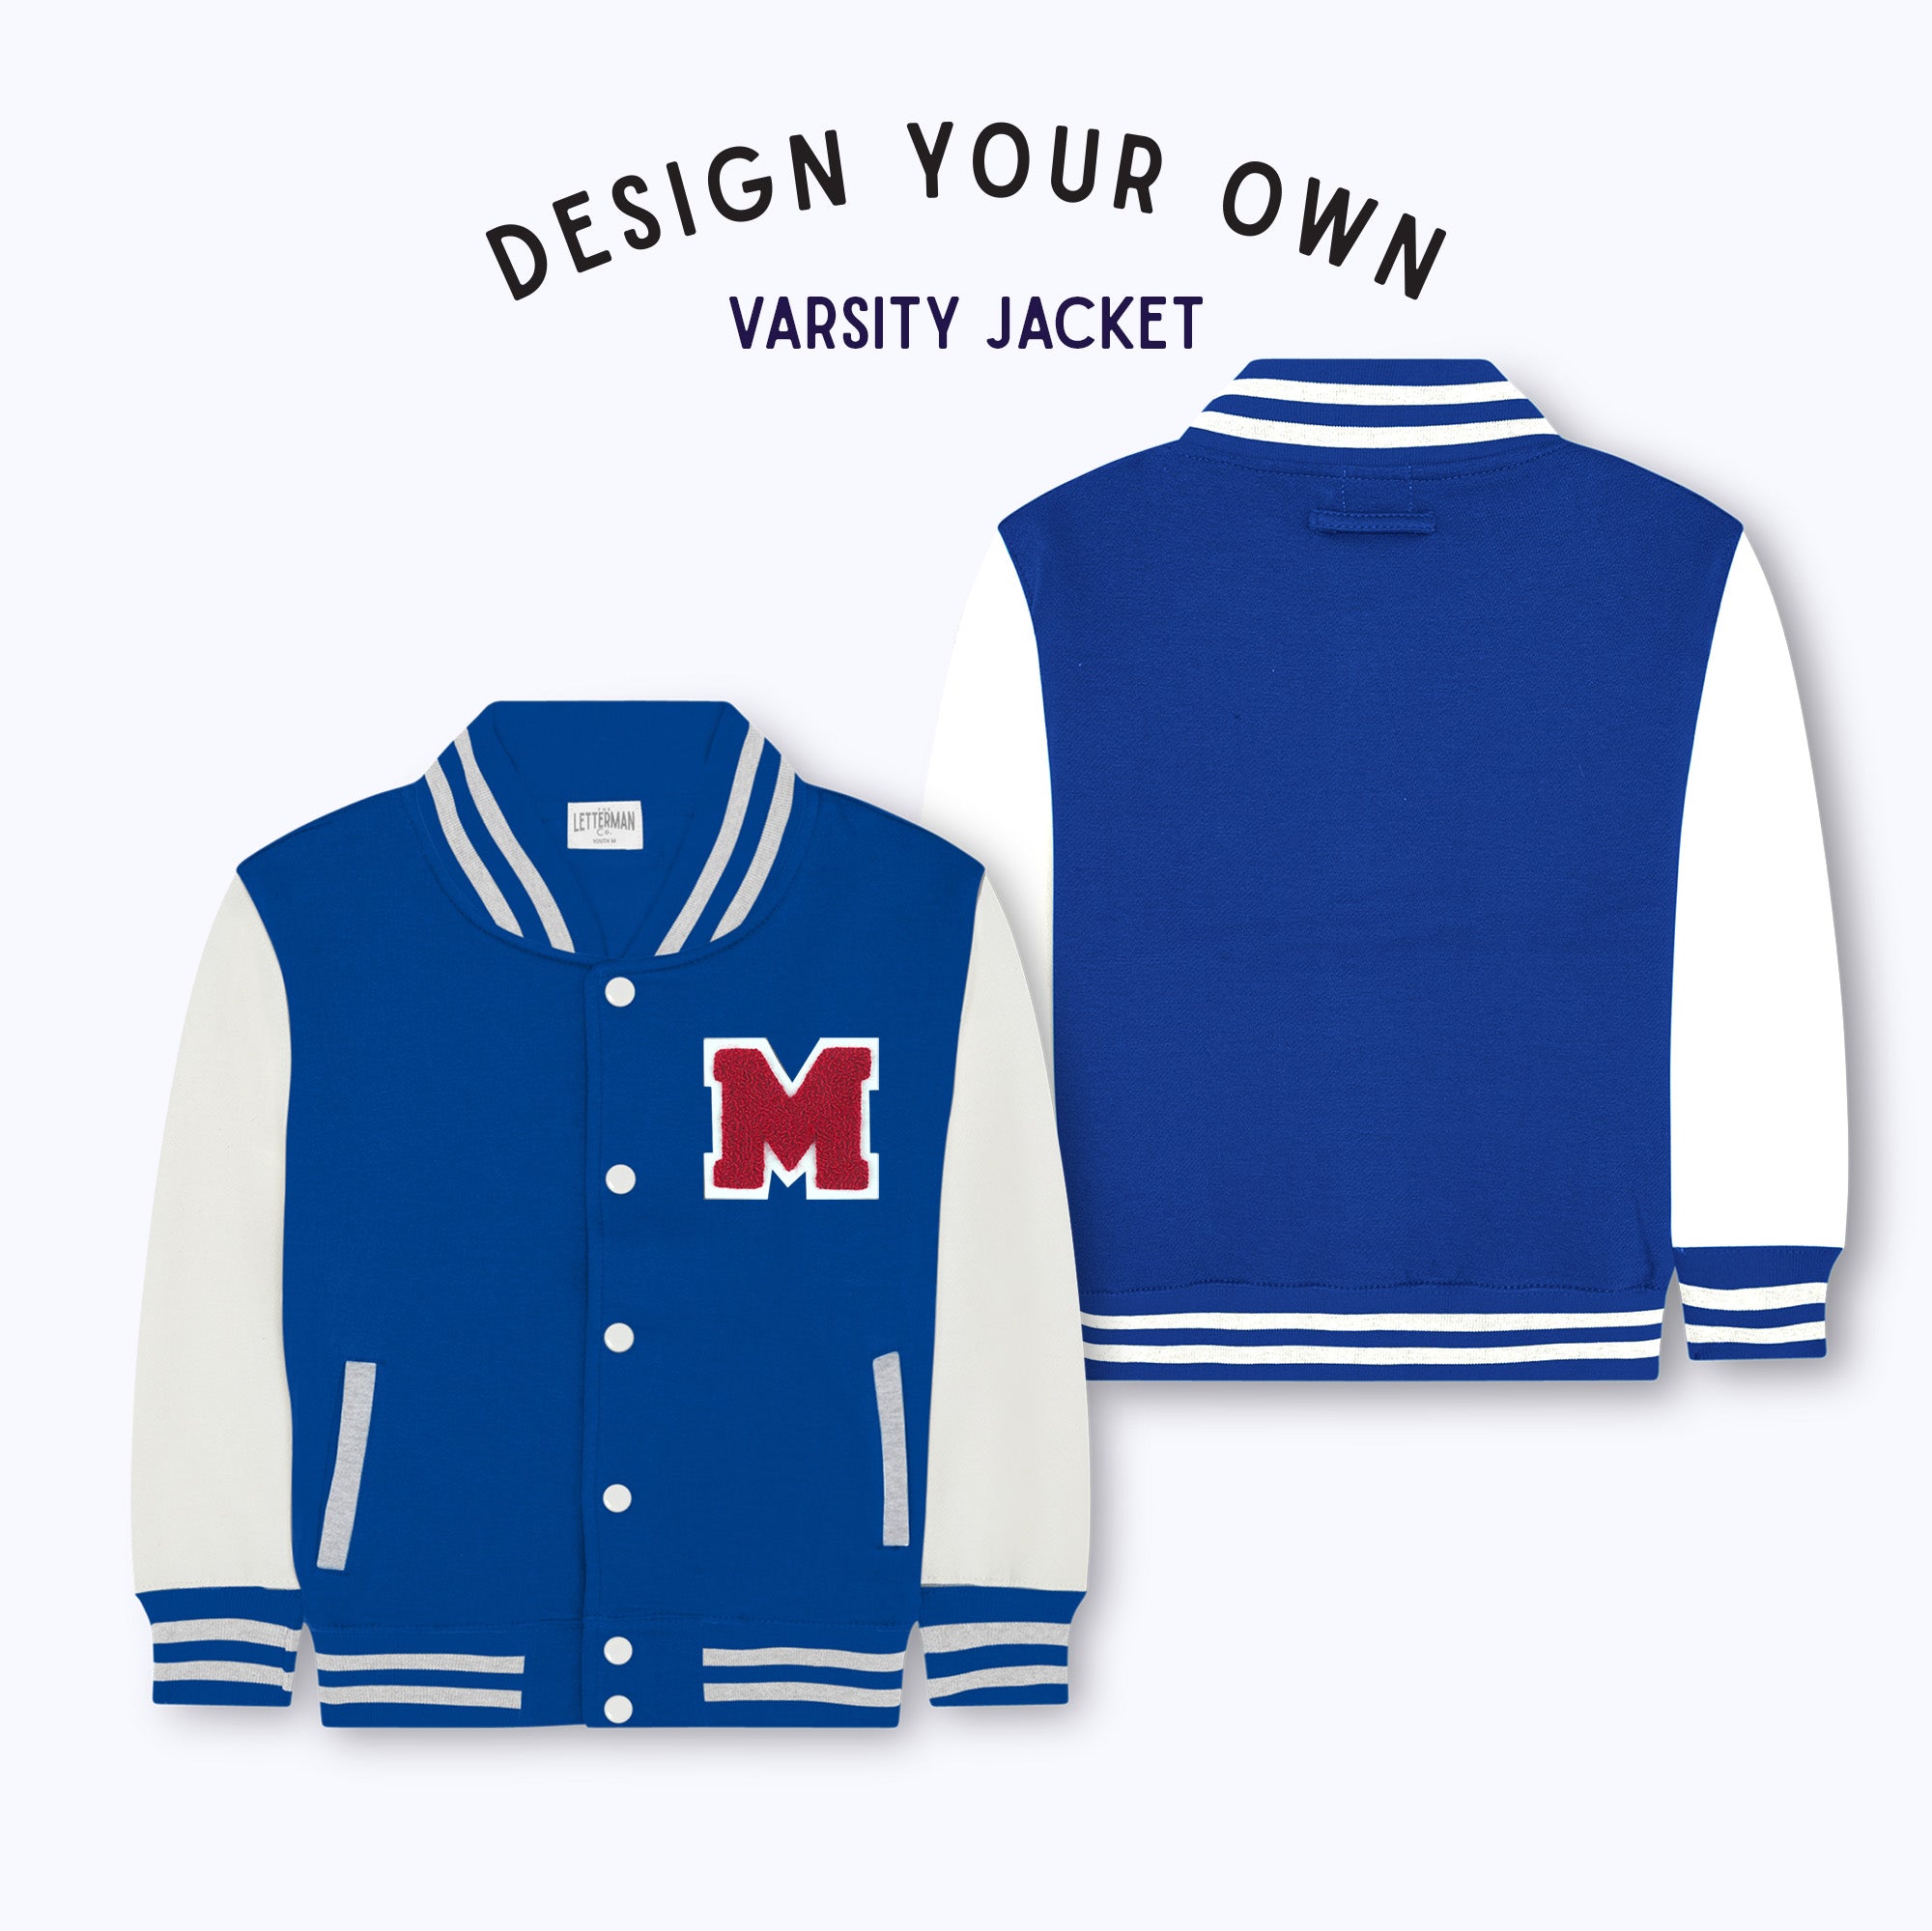 Varsity Jackets - Custom Designs and Sports